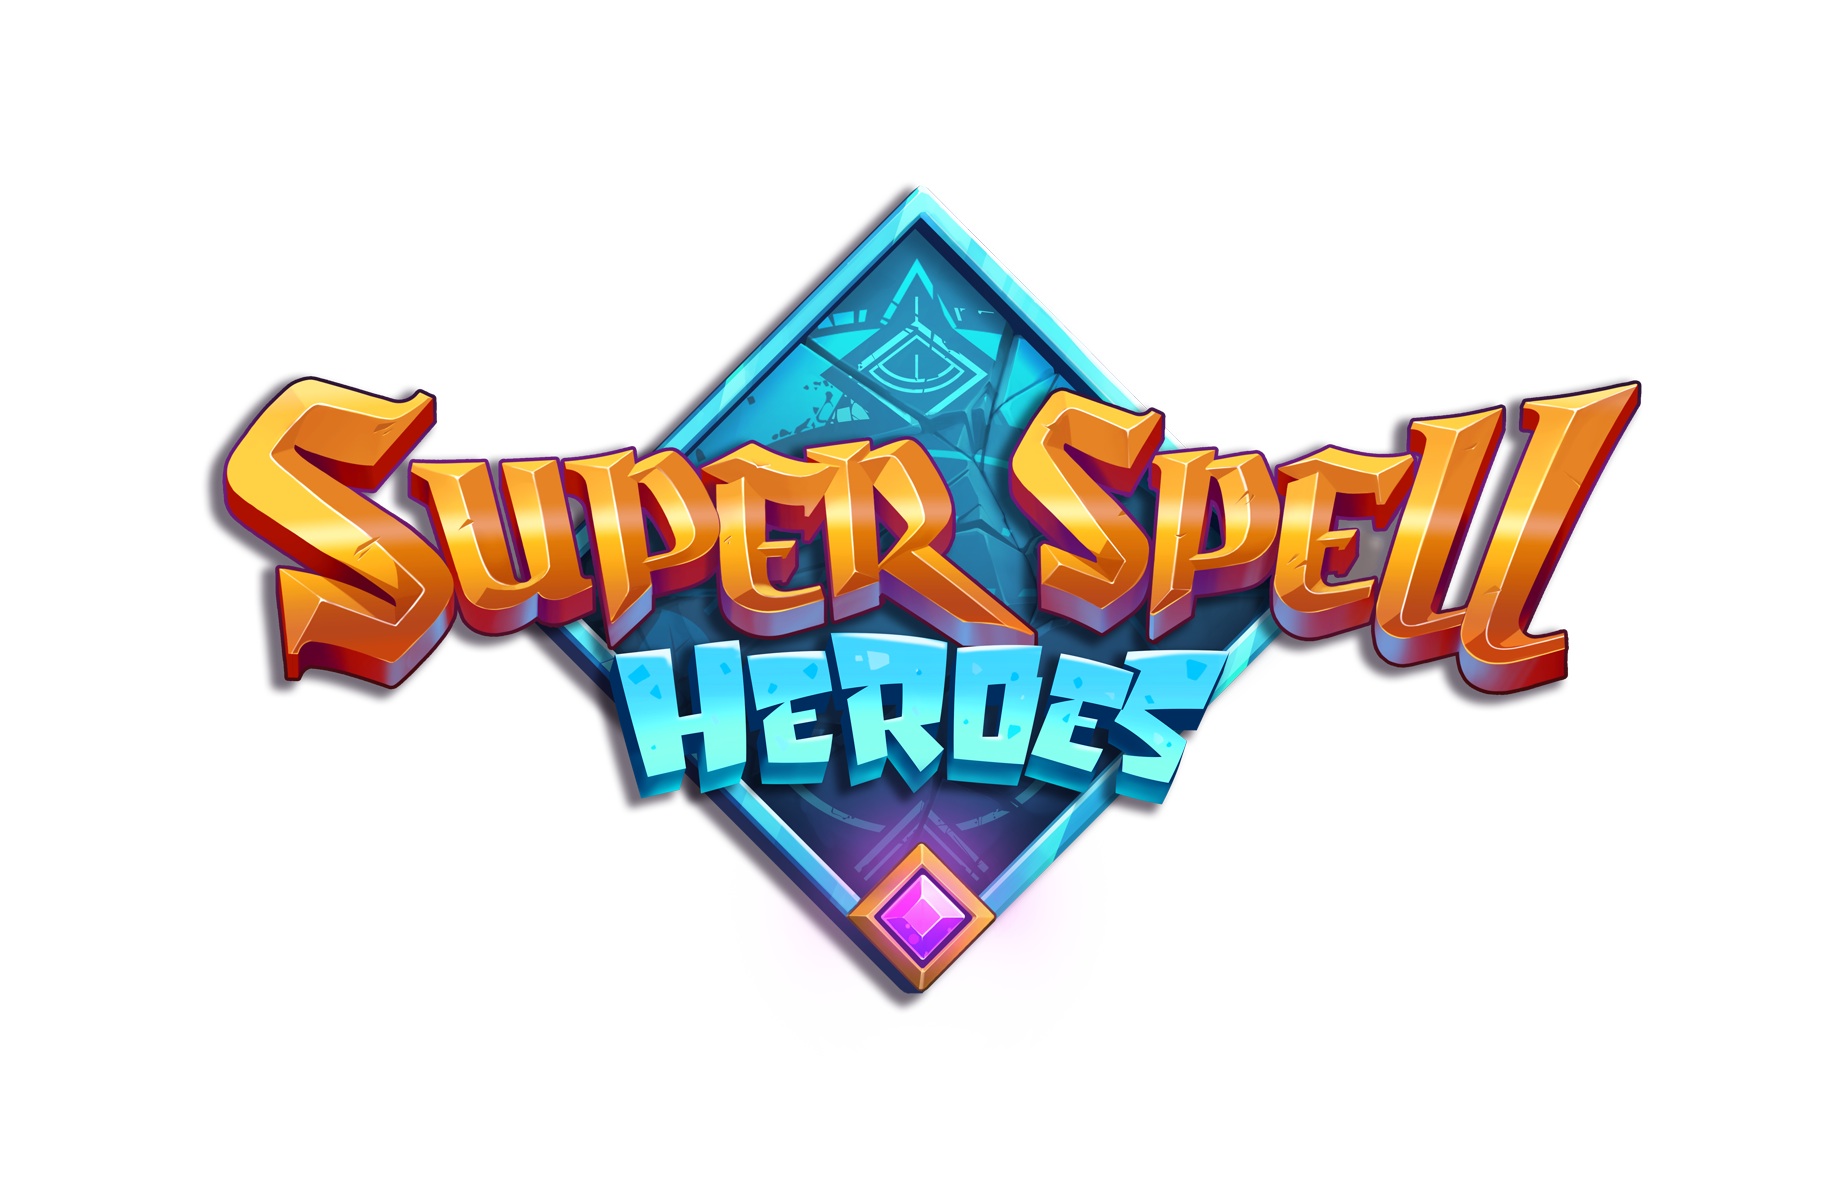 Super Spell Heroes landing on mobile August 20th